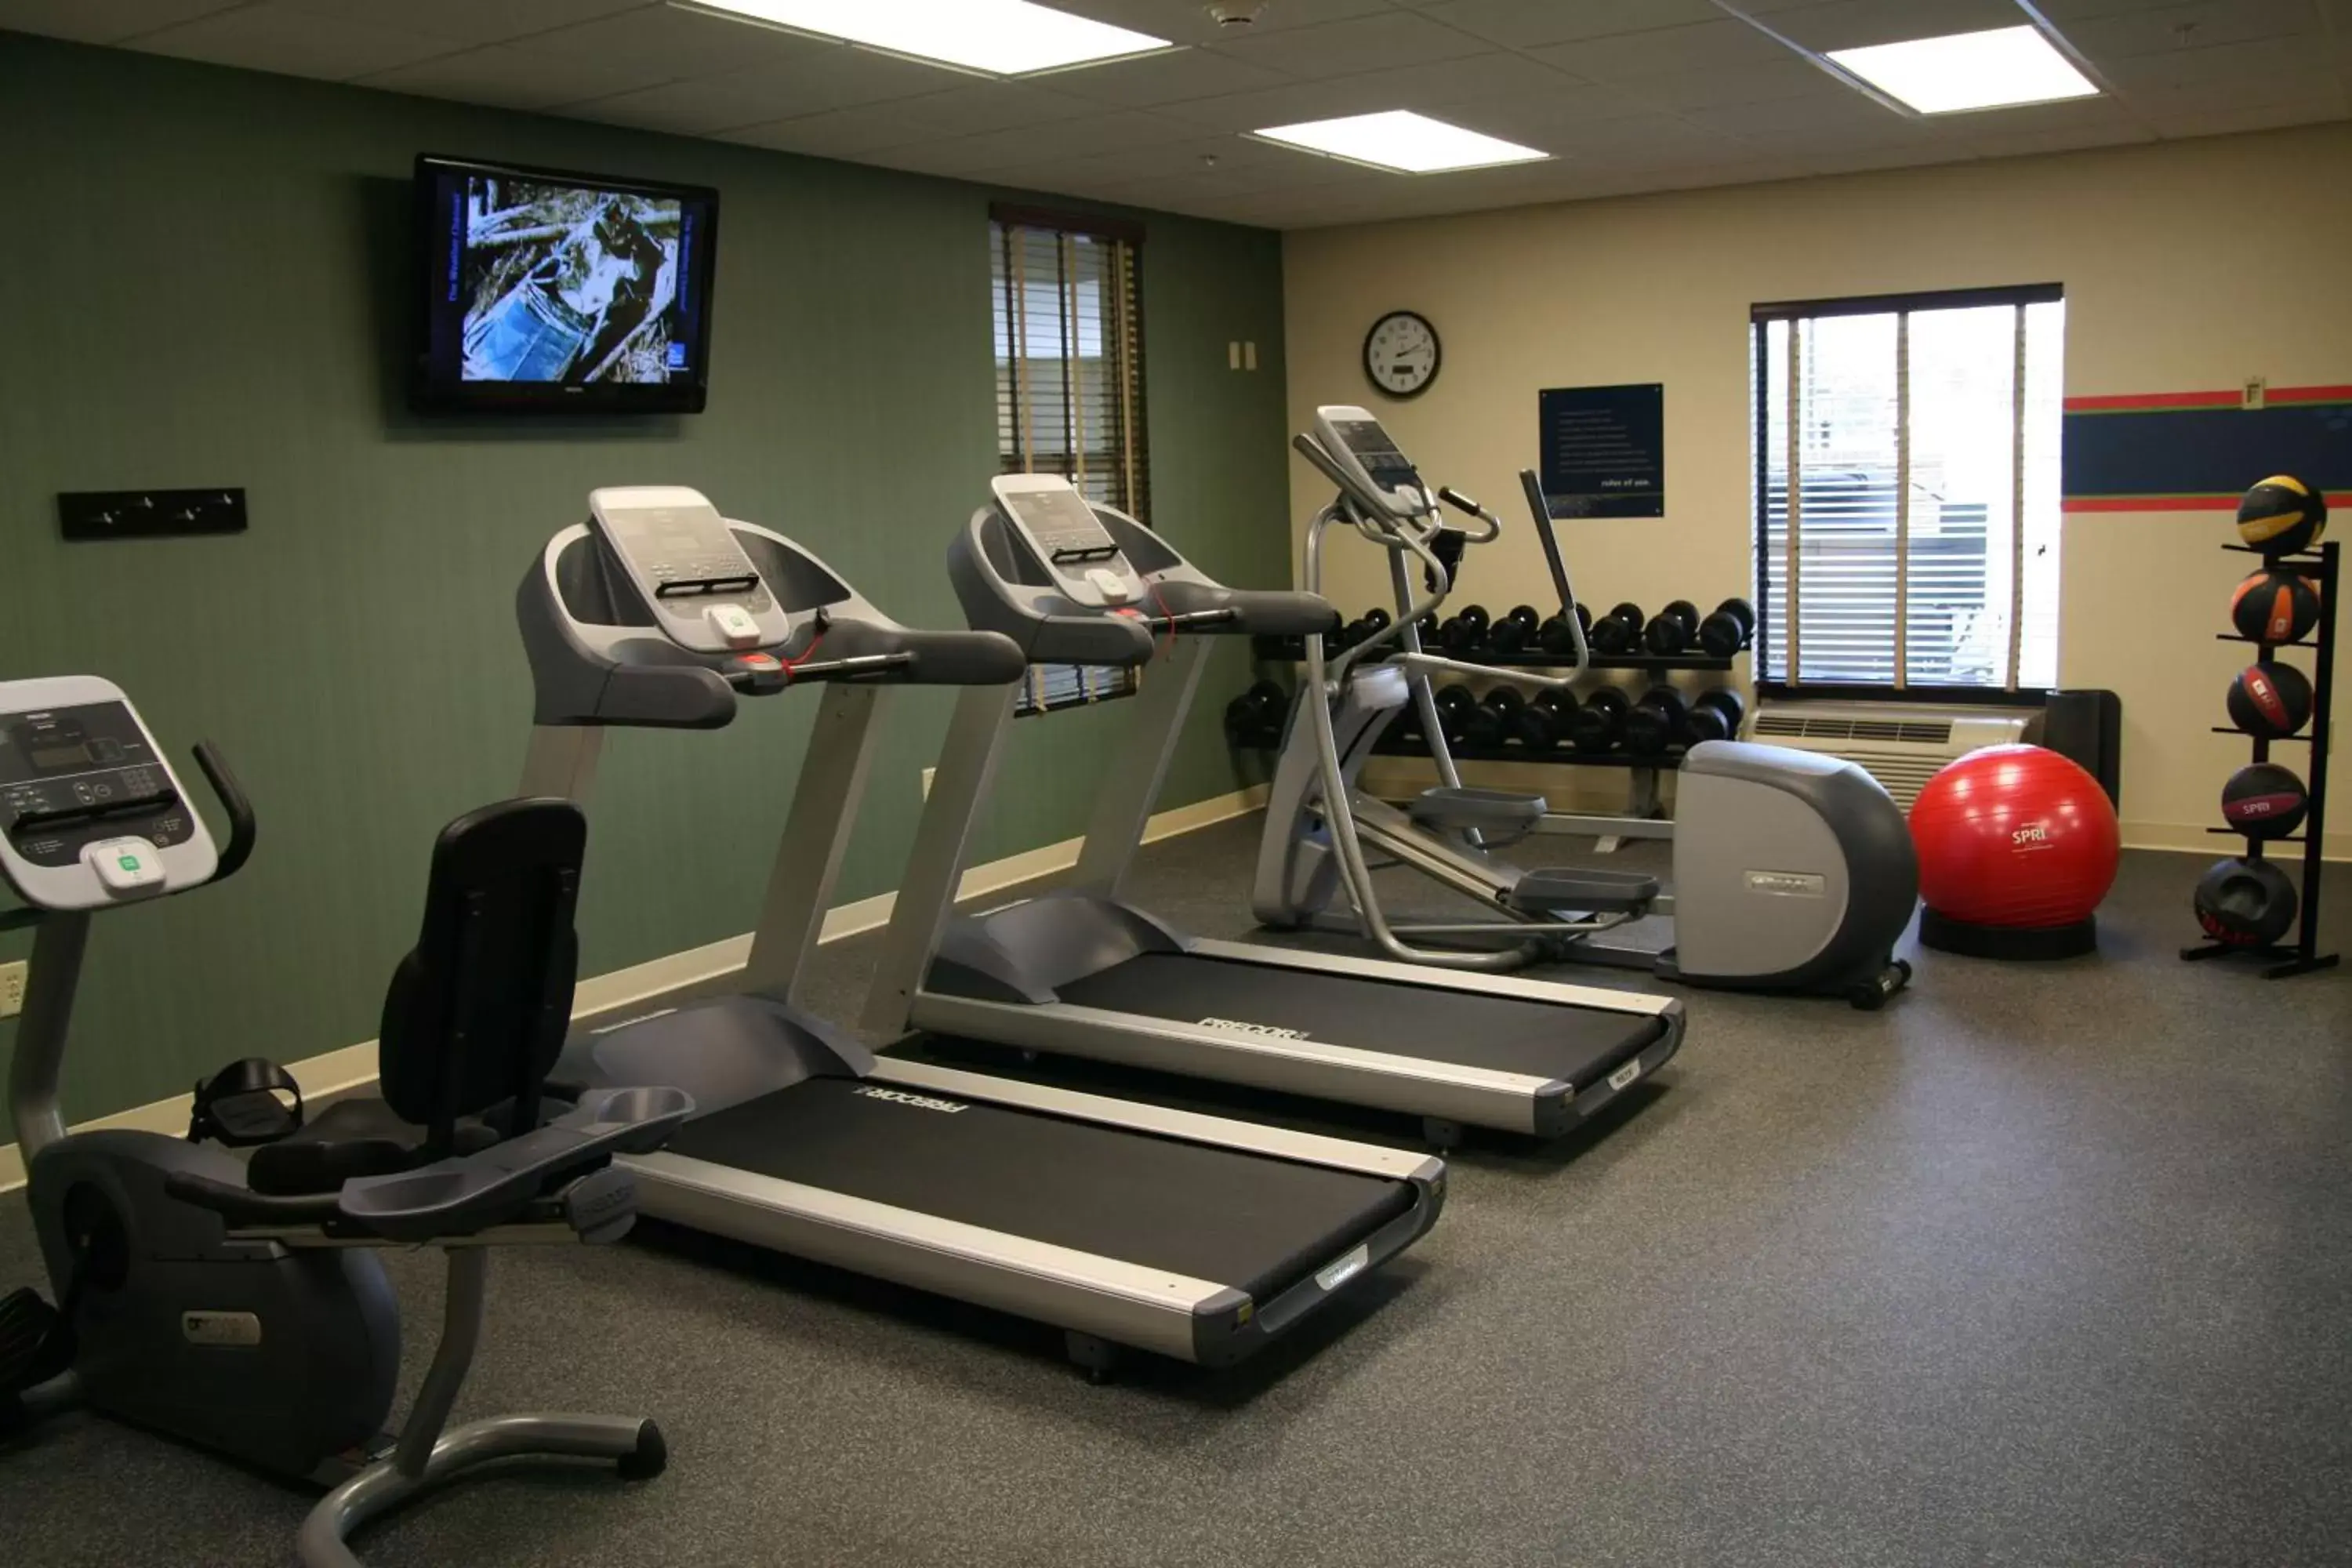 Fitness centre/facilities, Fitness Center/Facilities in Hampton Inn Dandridge